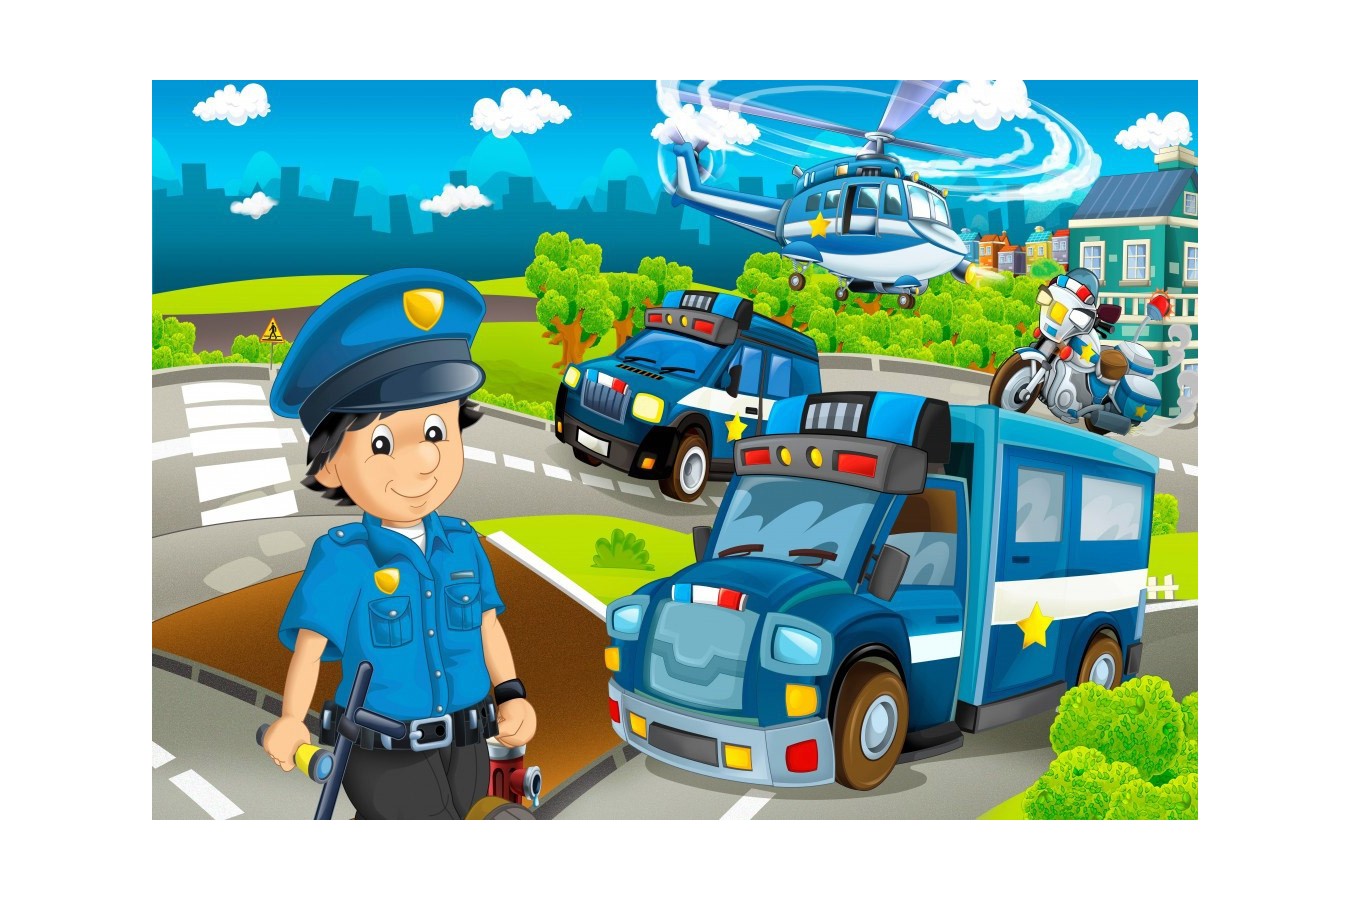 Puzzle Bluebird - Police Rescue Team, 48 piese (70363)